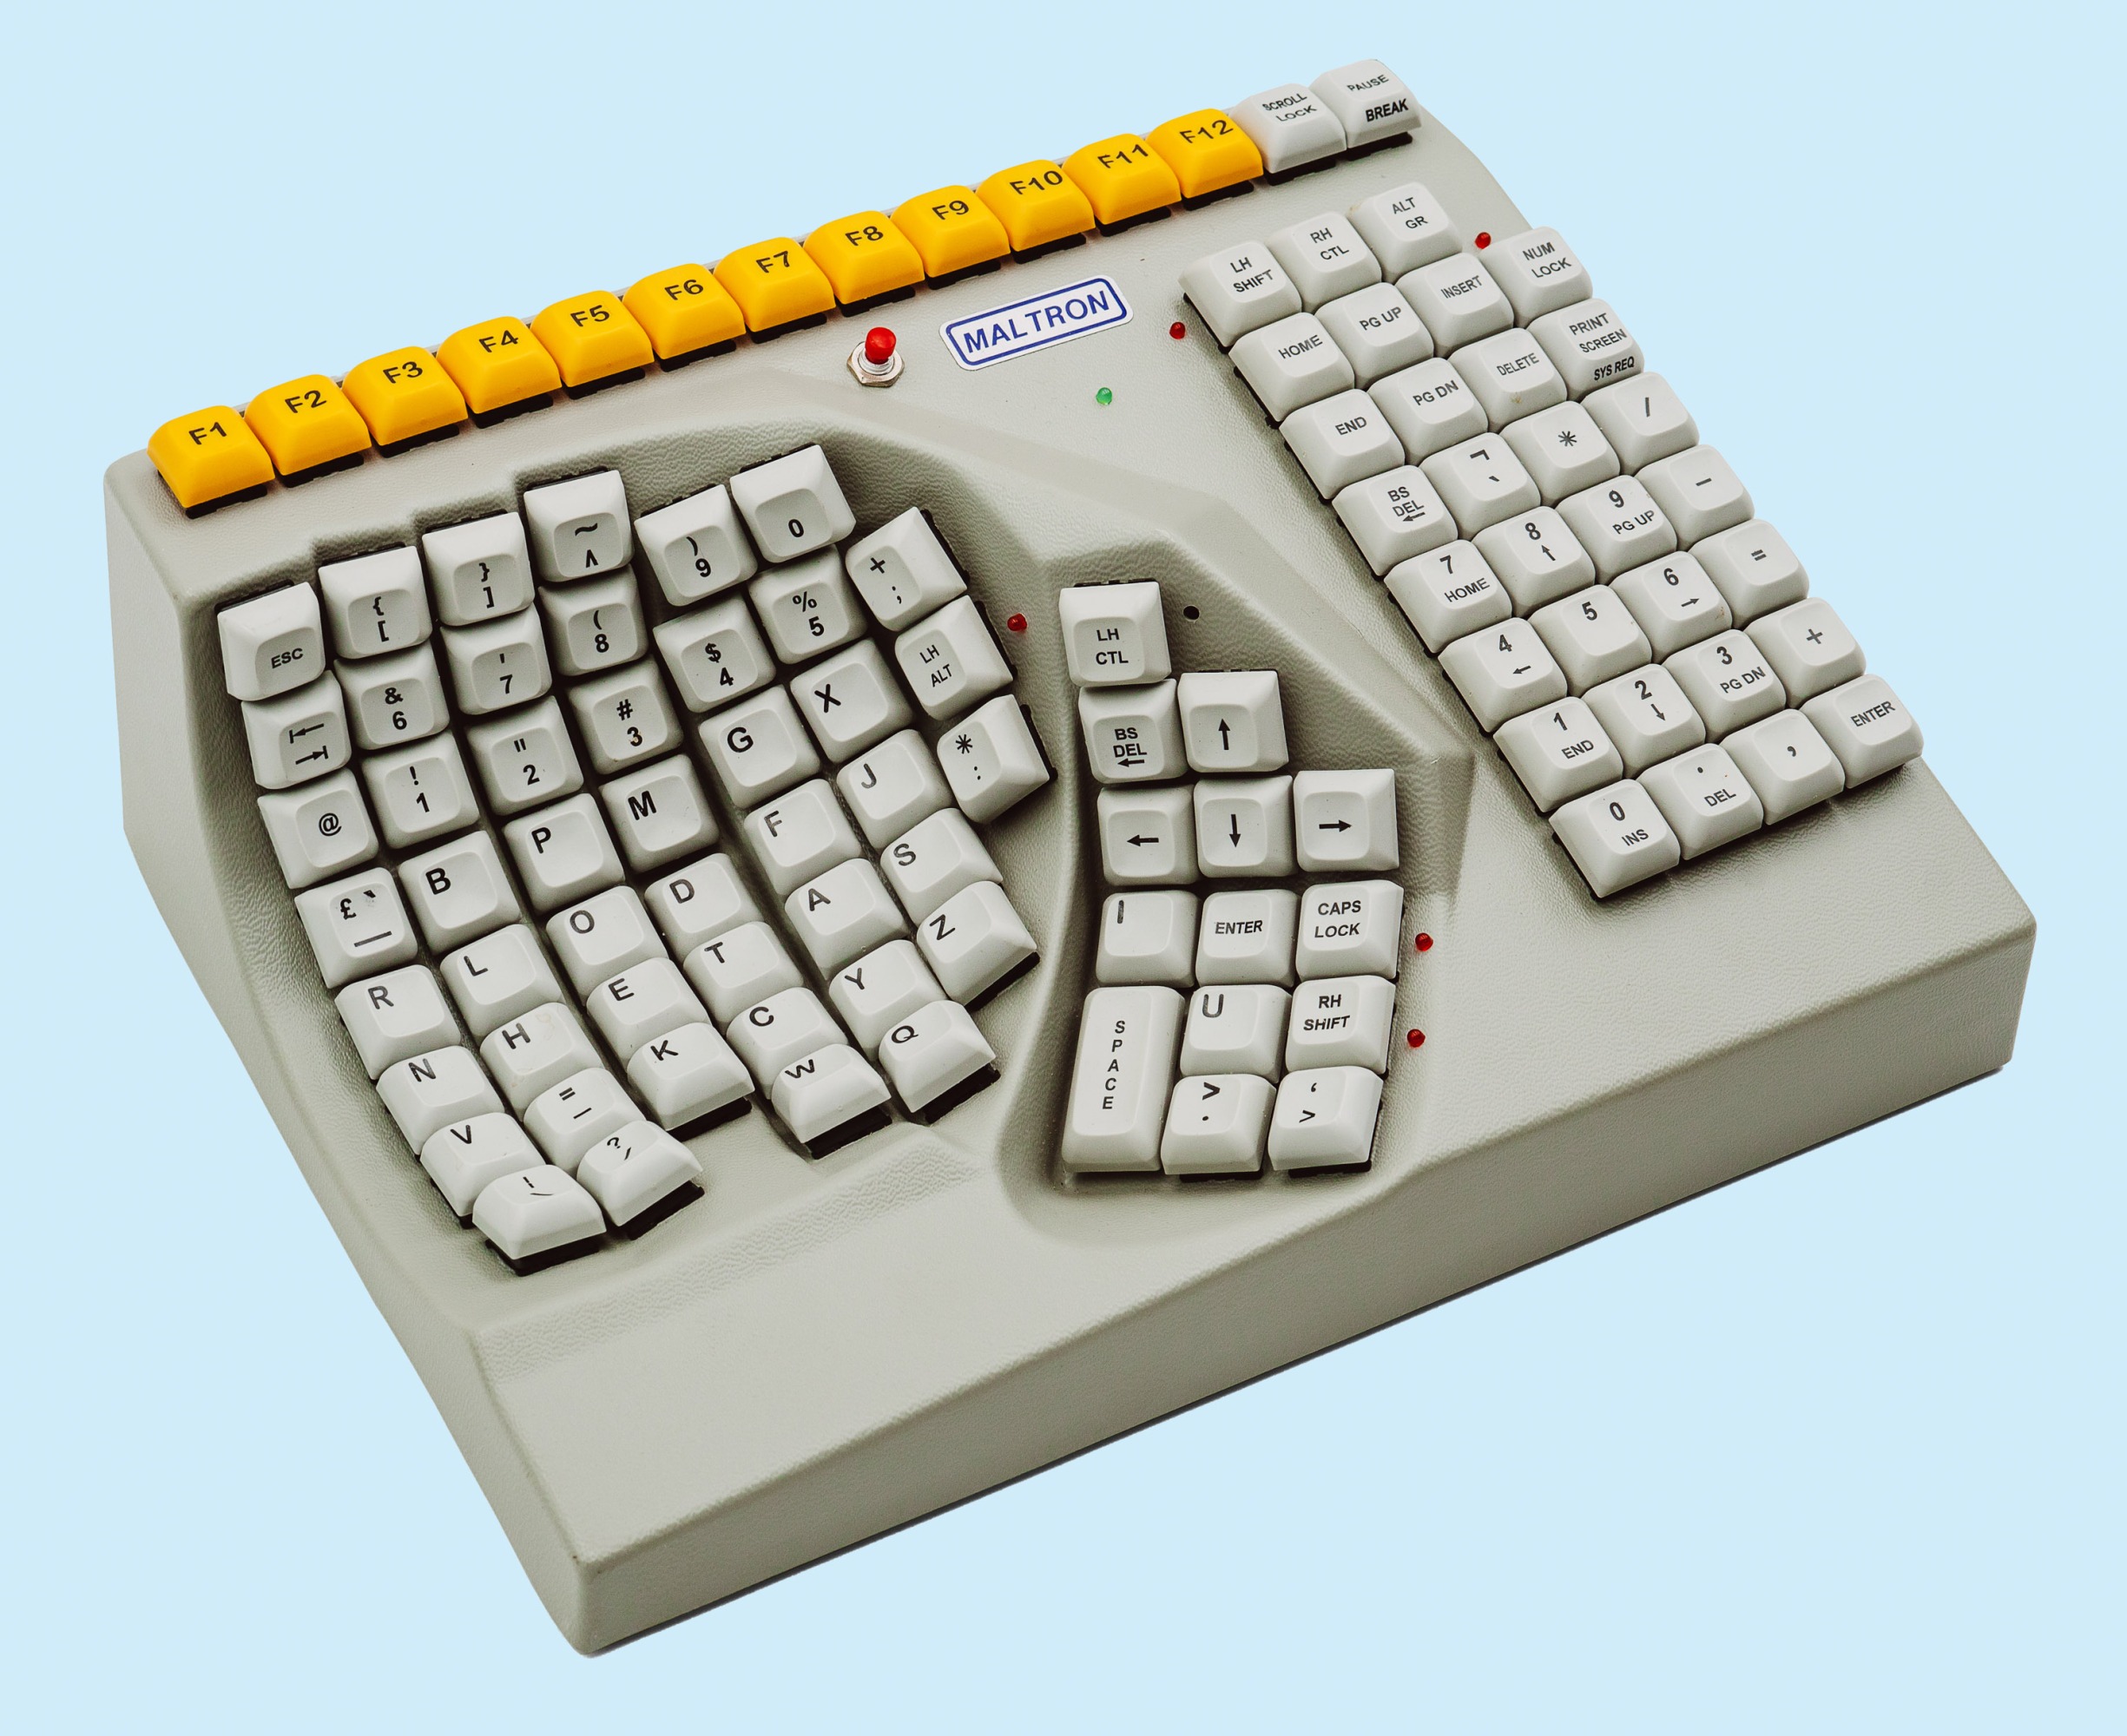 Maltron one-handed keyboard